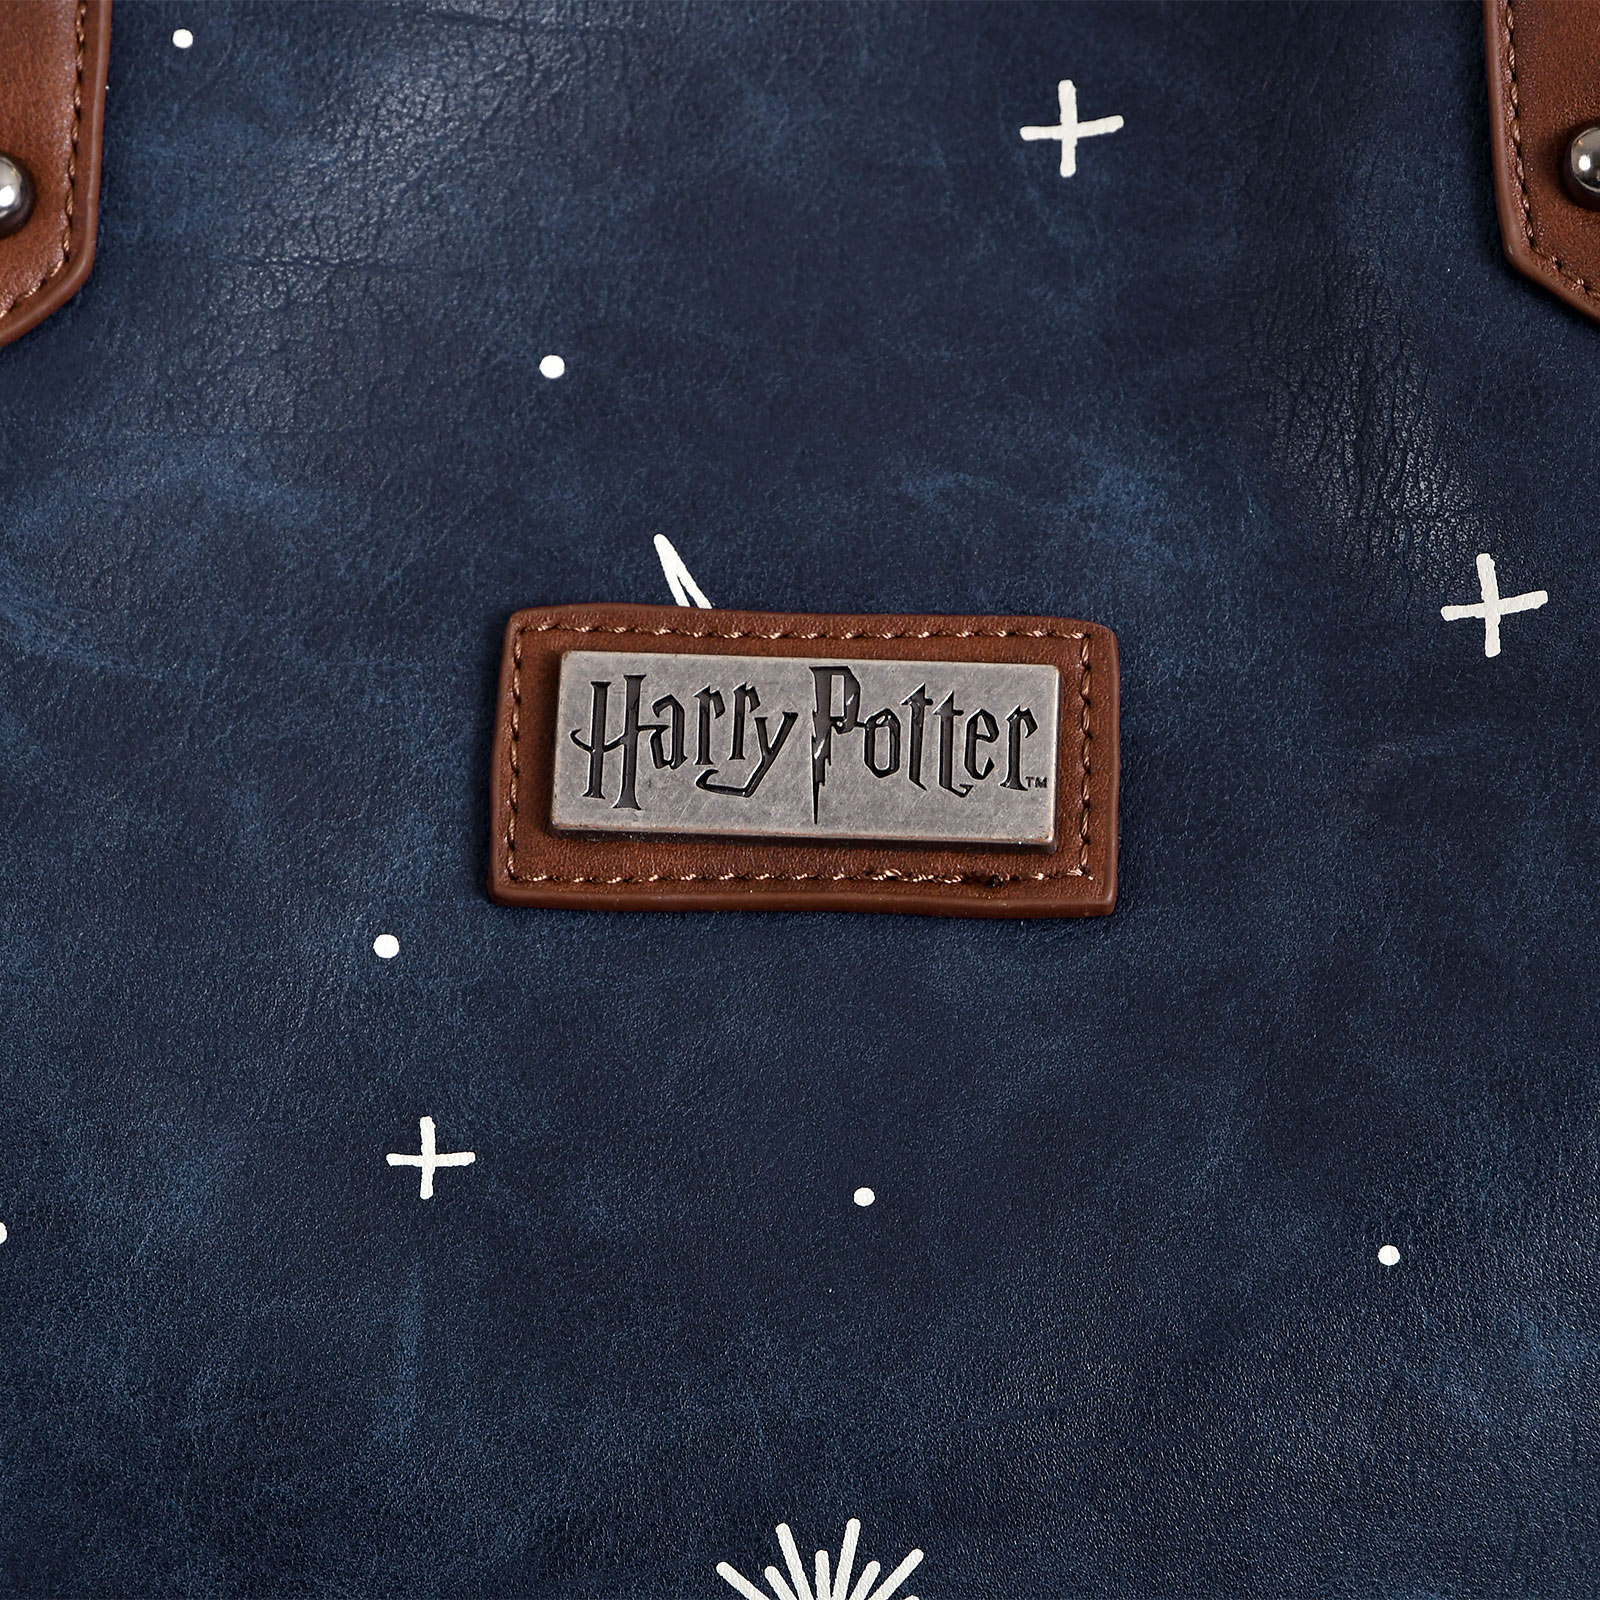 Harry Potter - Karte des Rumtreibers Shopper Tasche